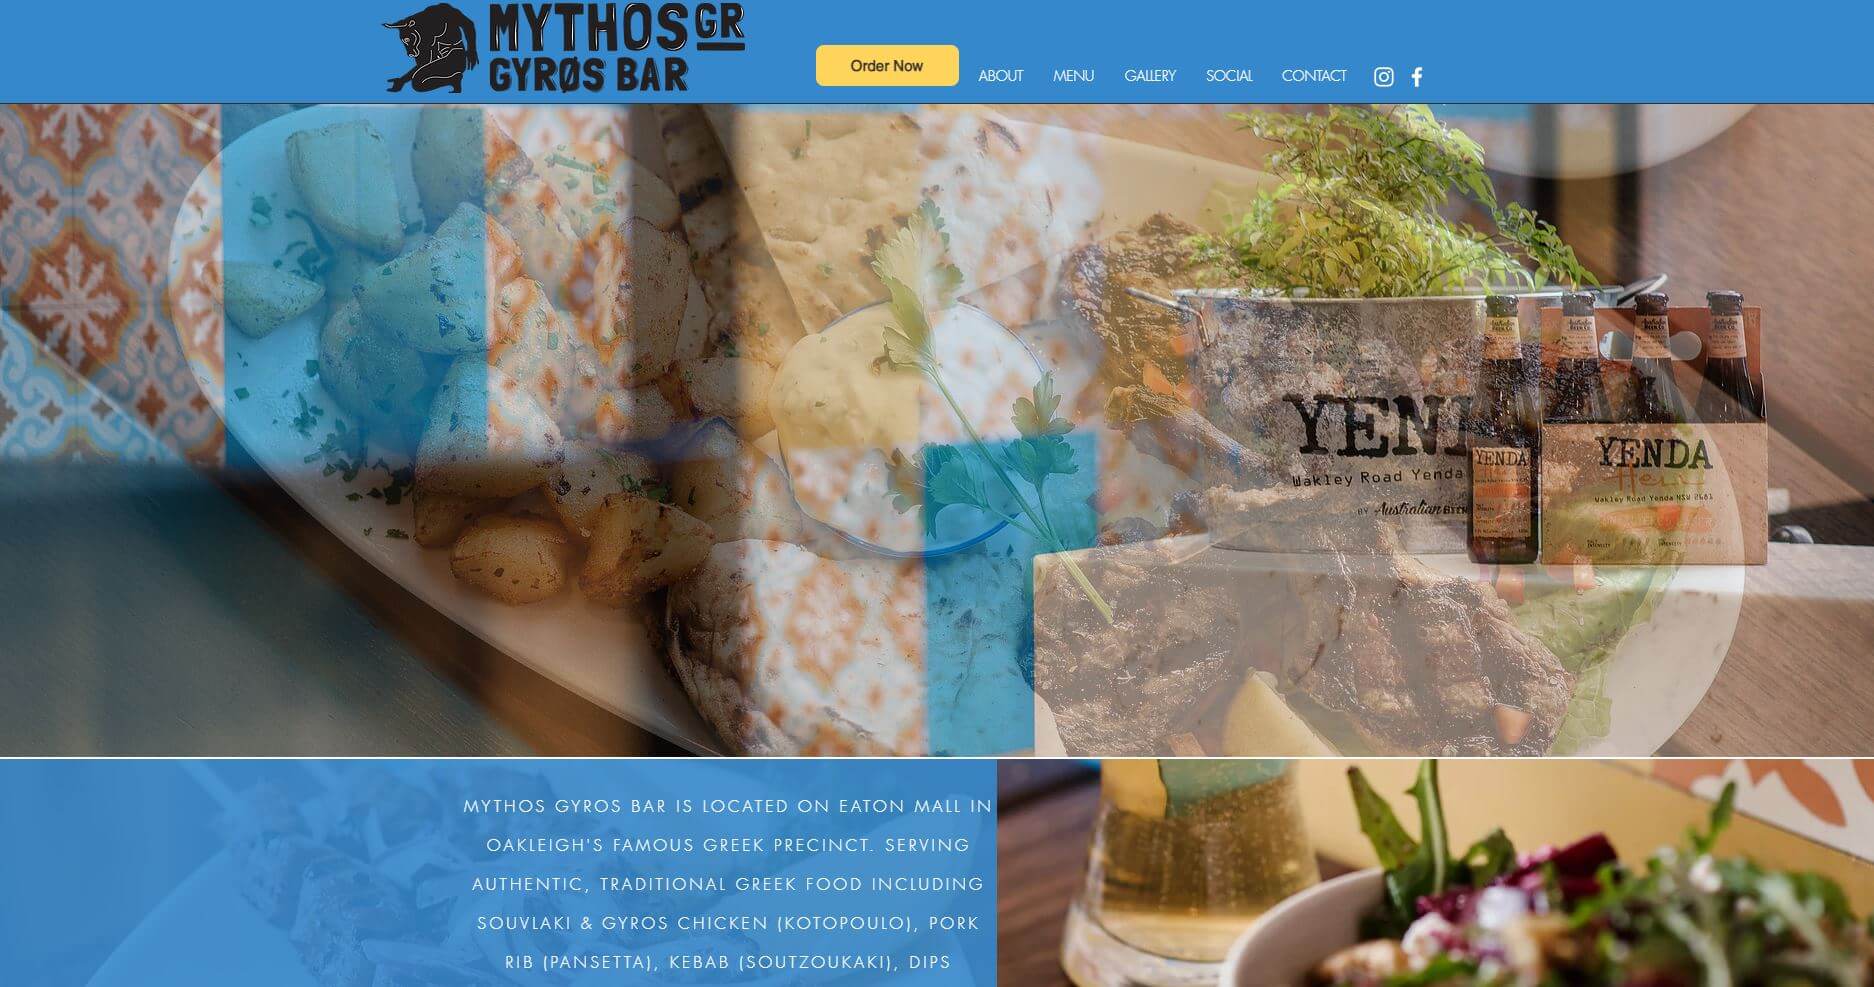 Myths Gyros Bar